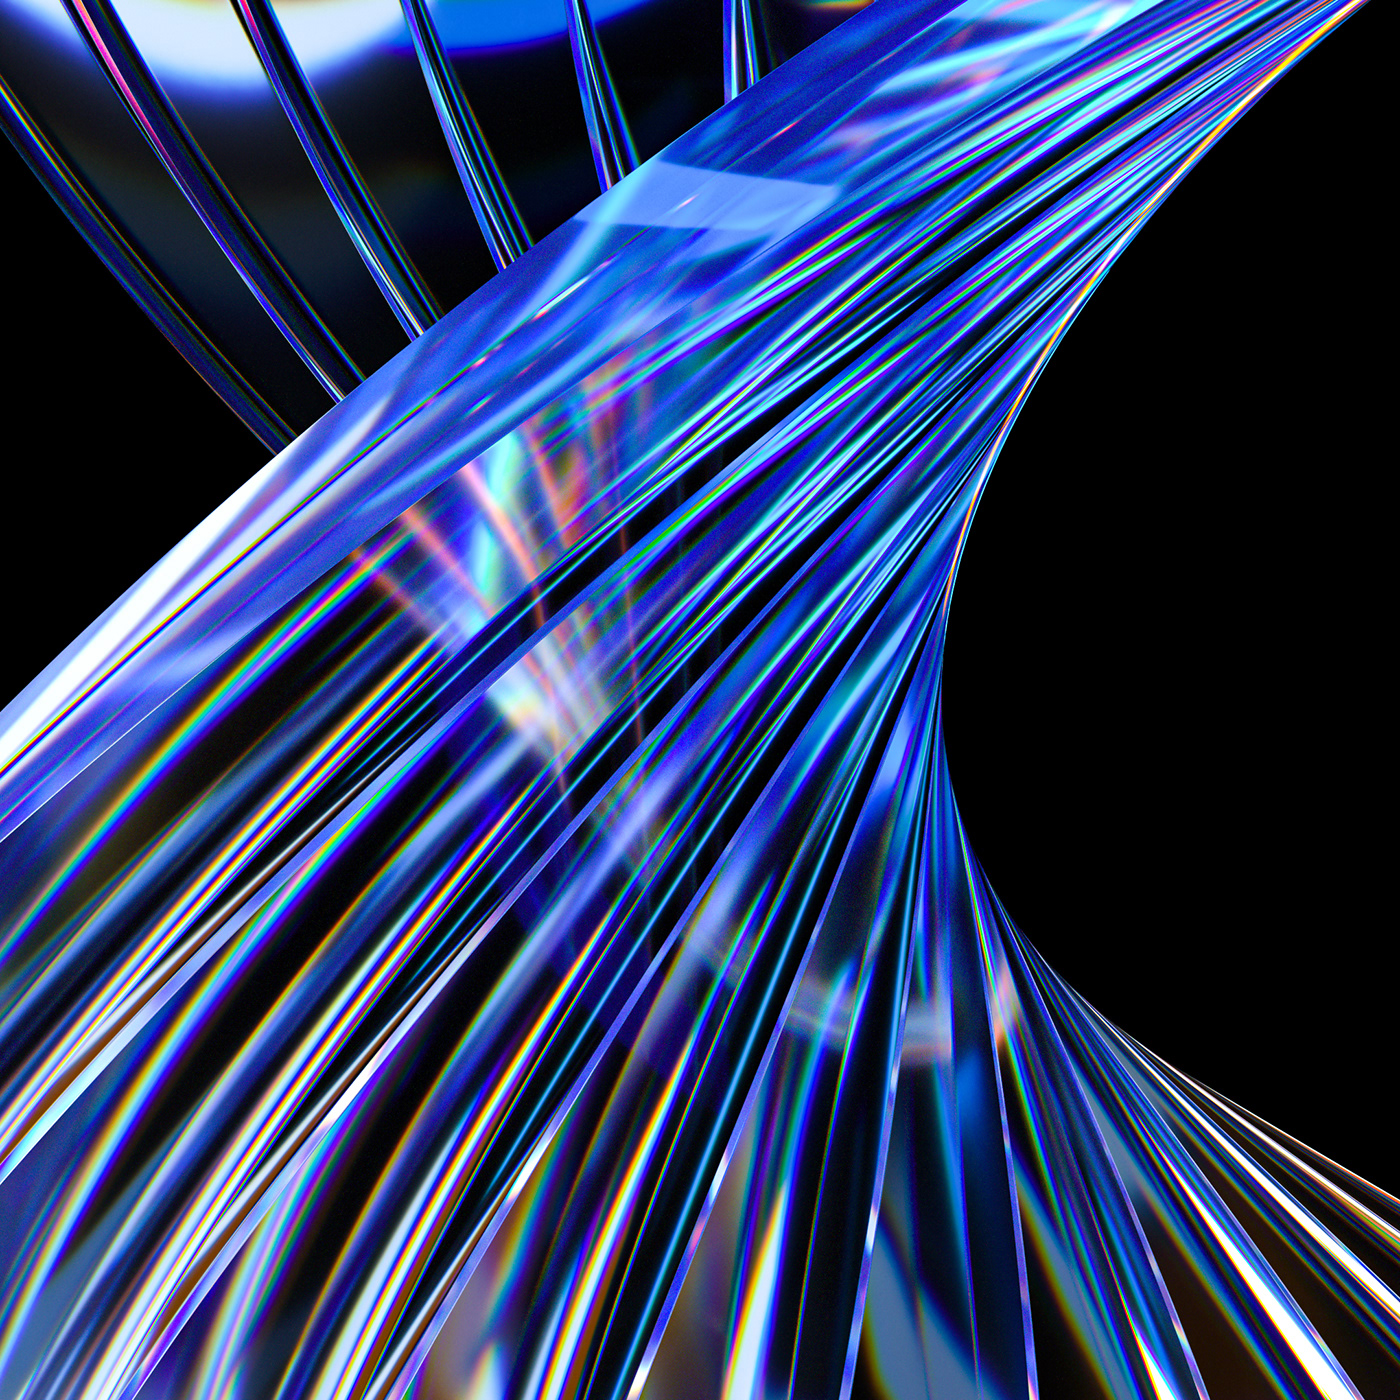 light glass prism dispersion difraction colorful blue black vibrant Specular